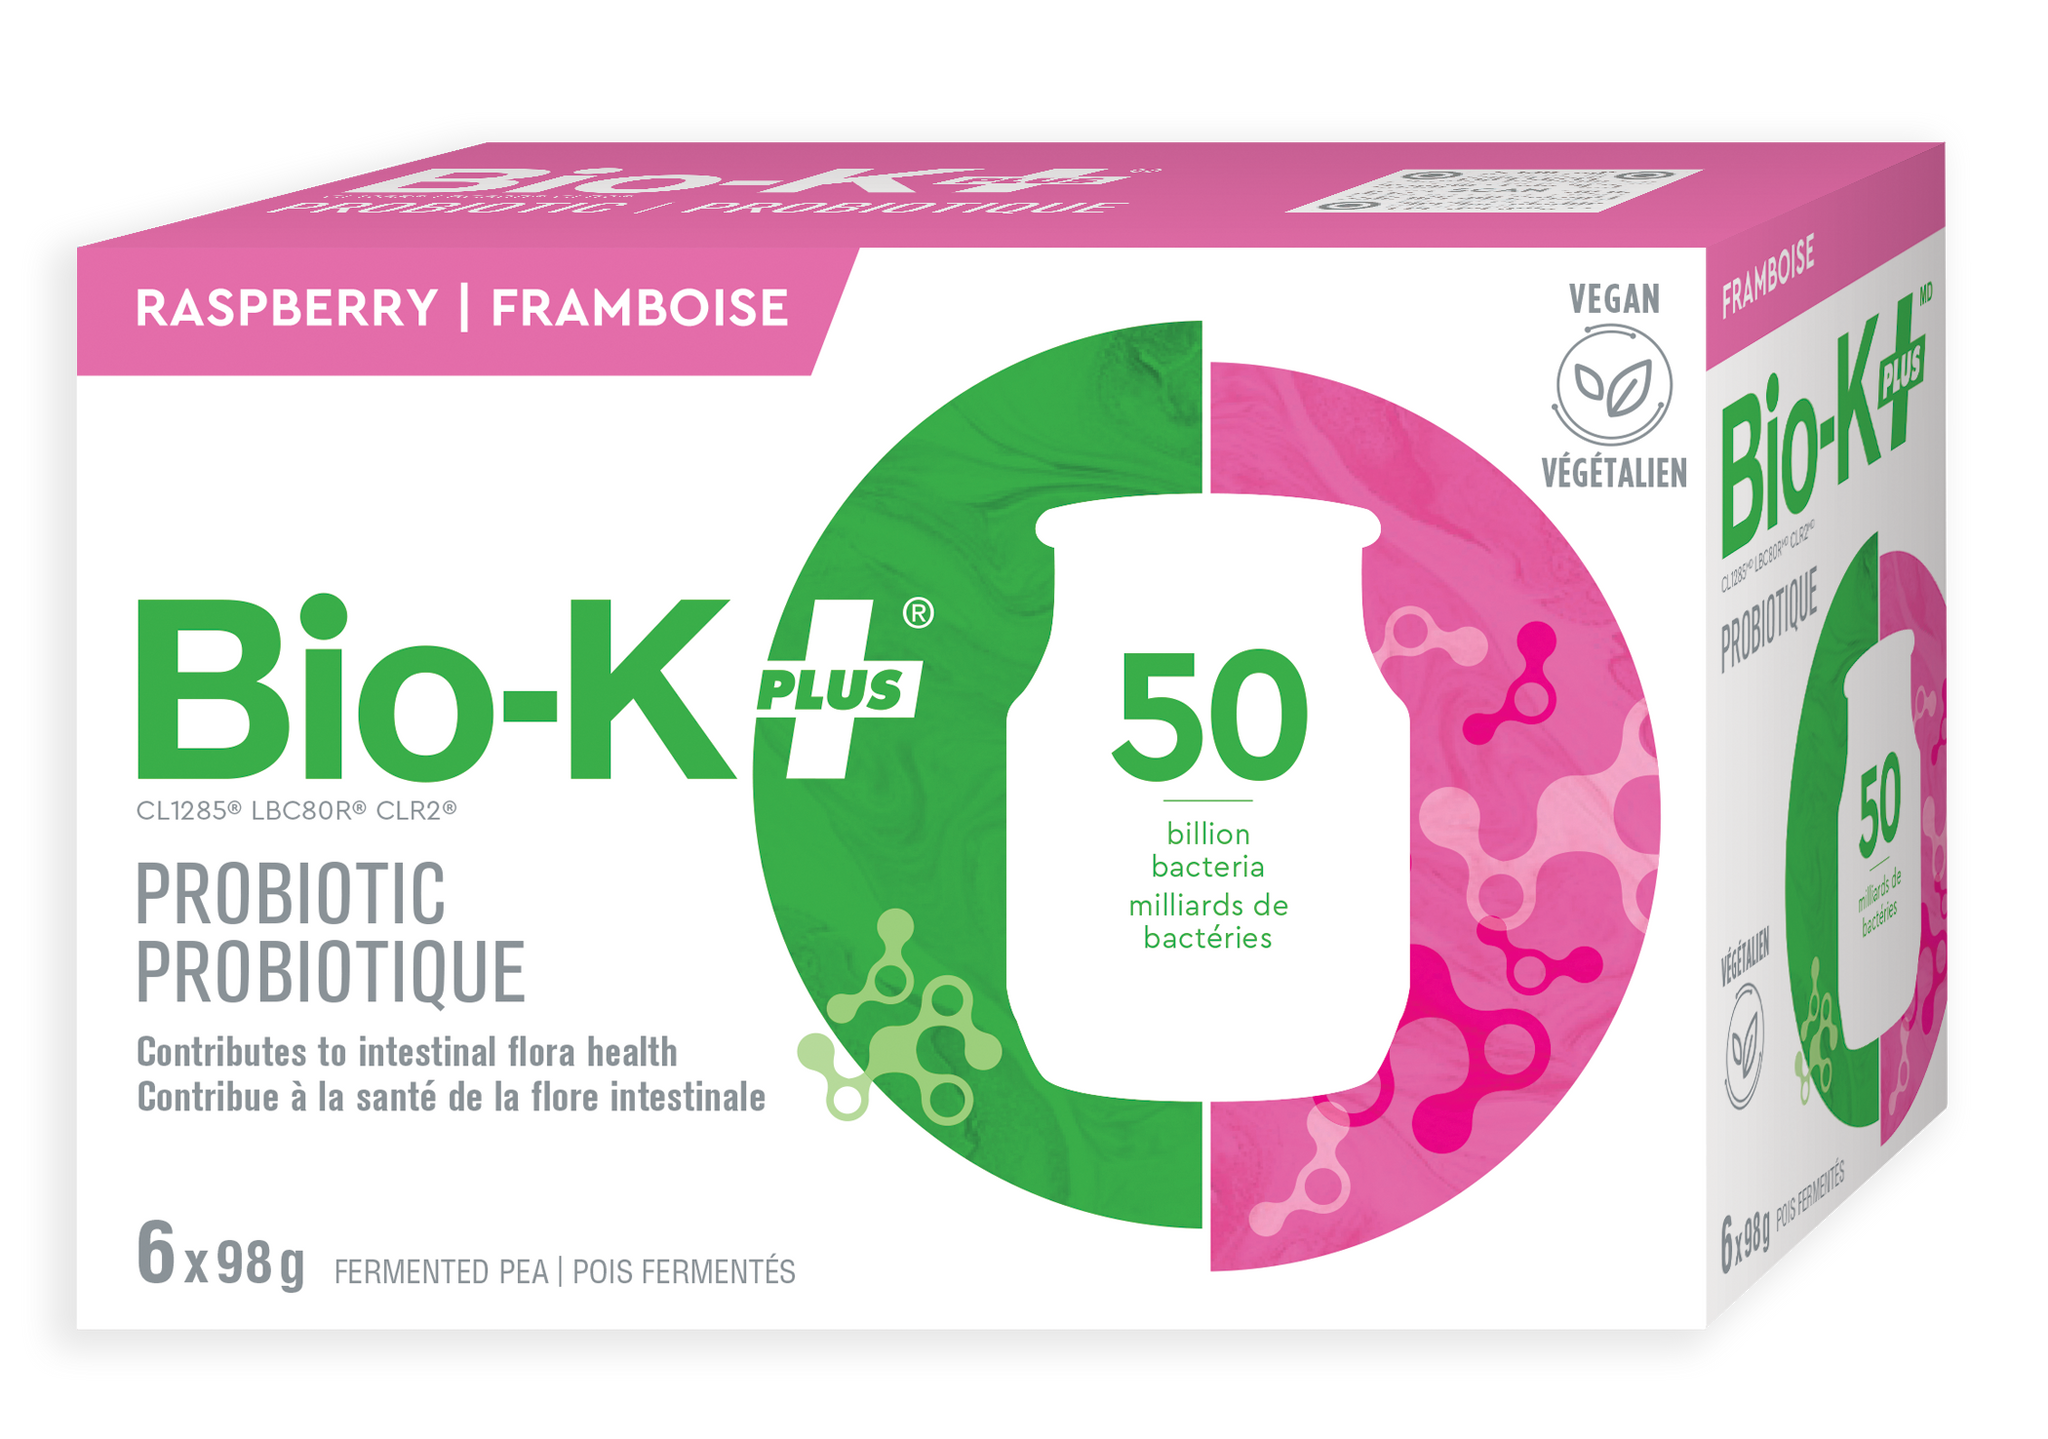 6-Pack of Drinkable Vegan Probiotics - Fermeted pea base - Rasberry flavour